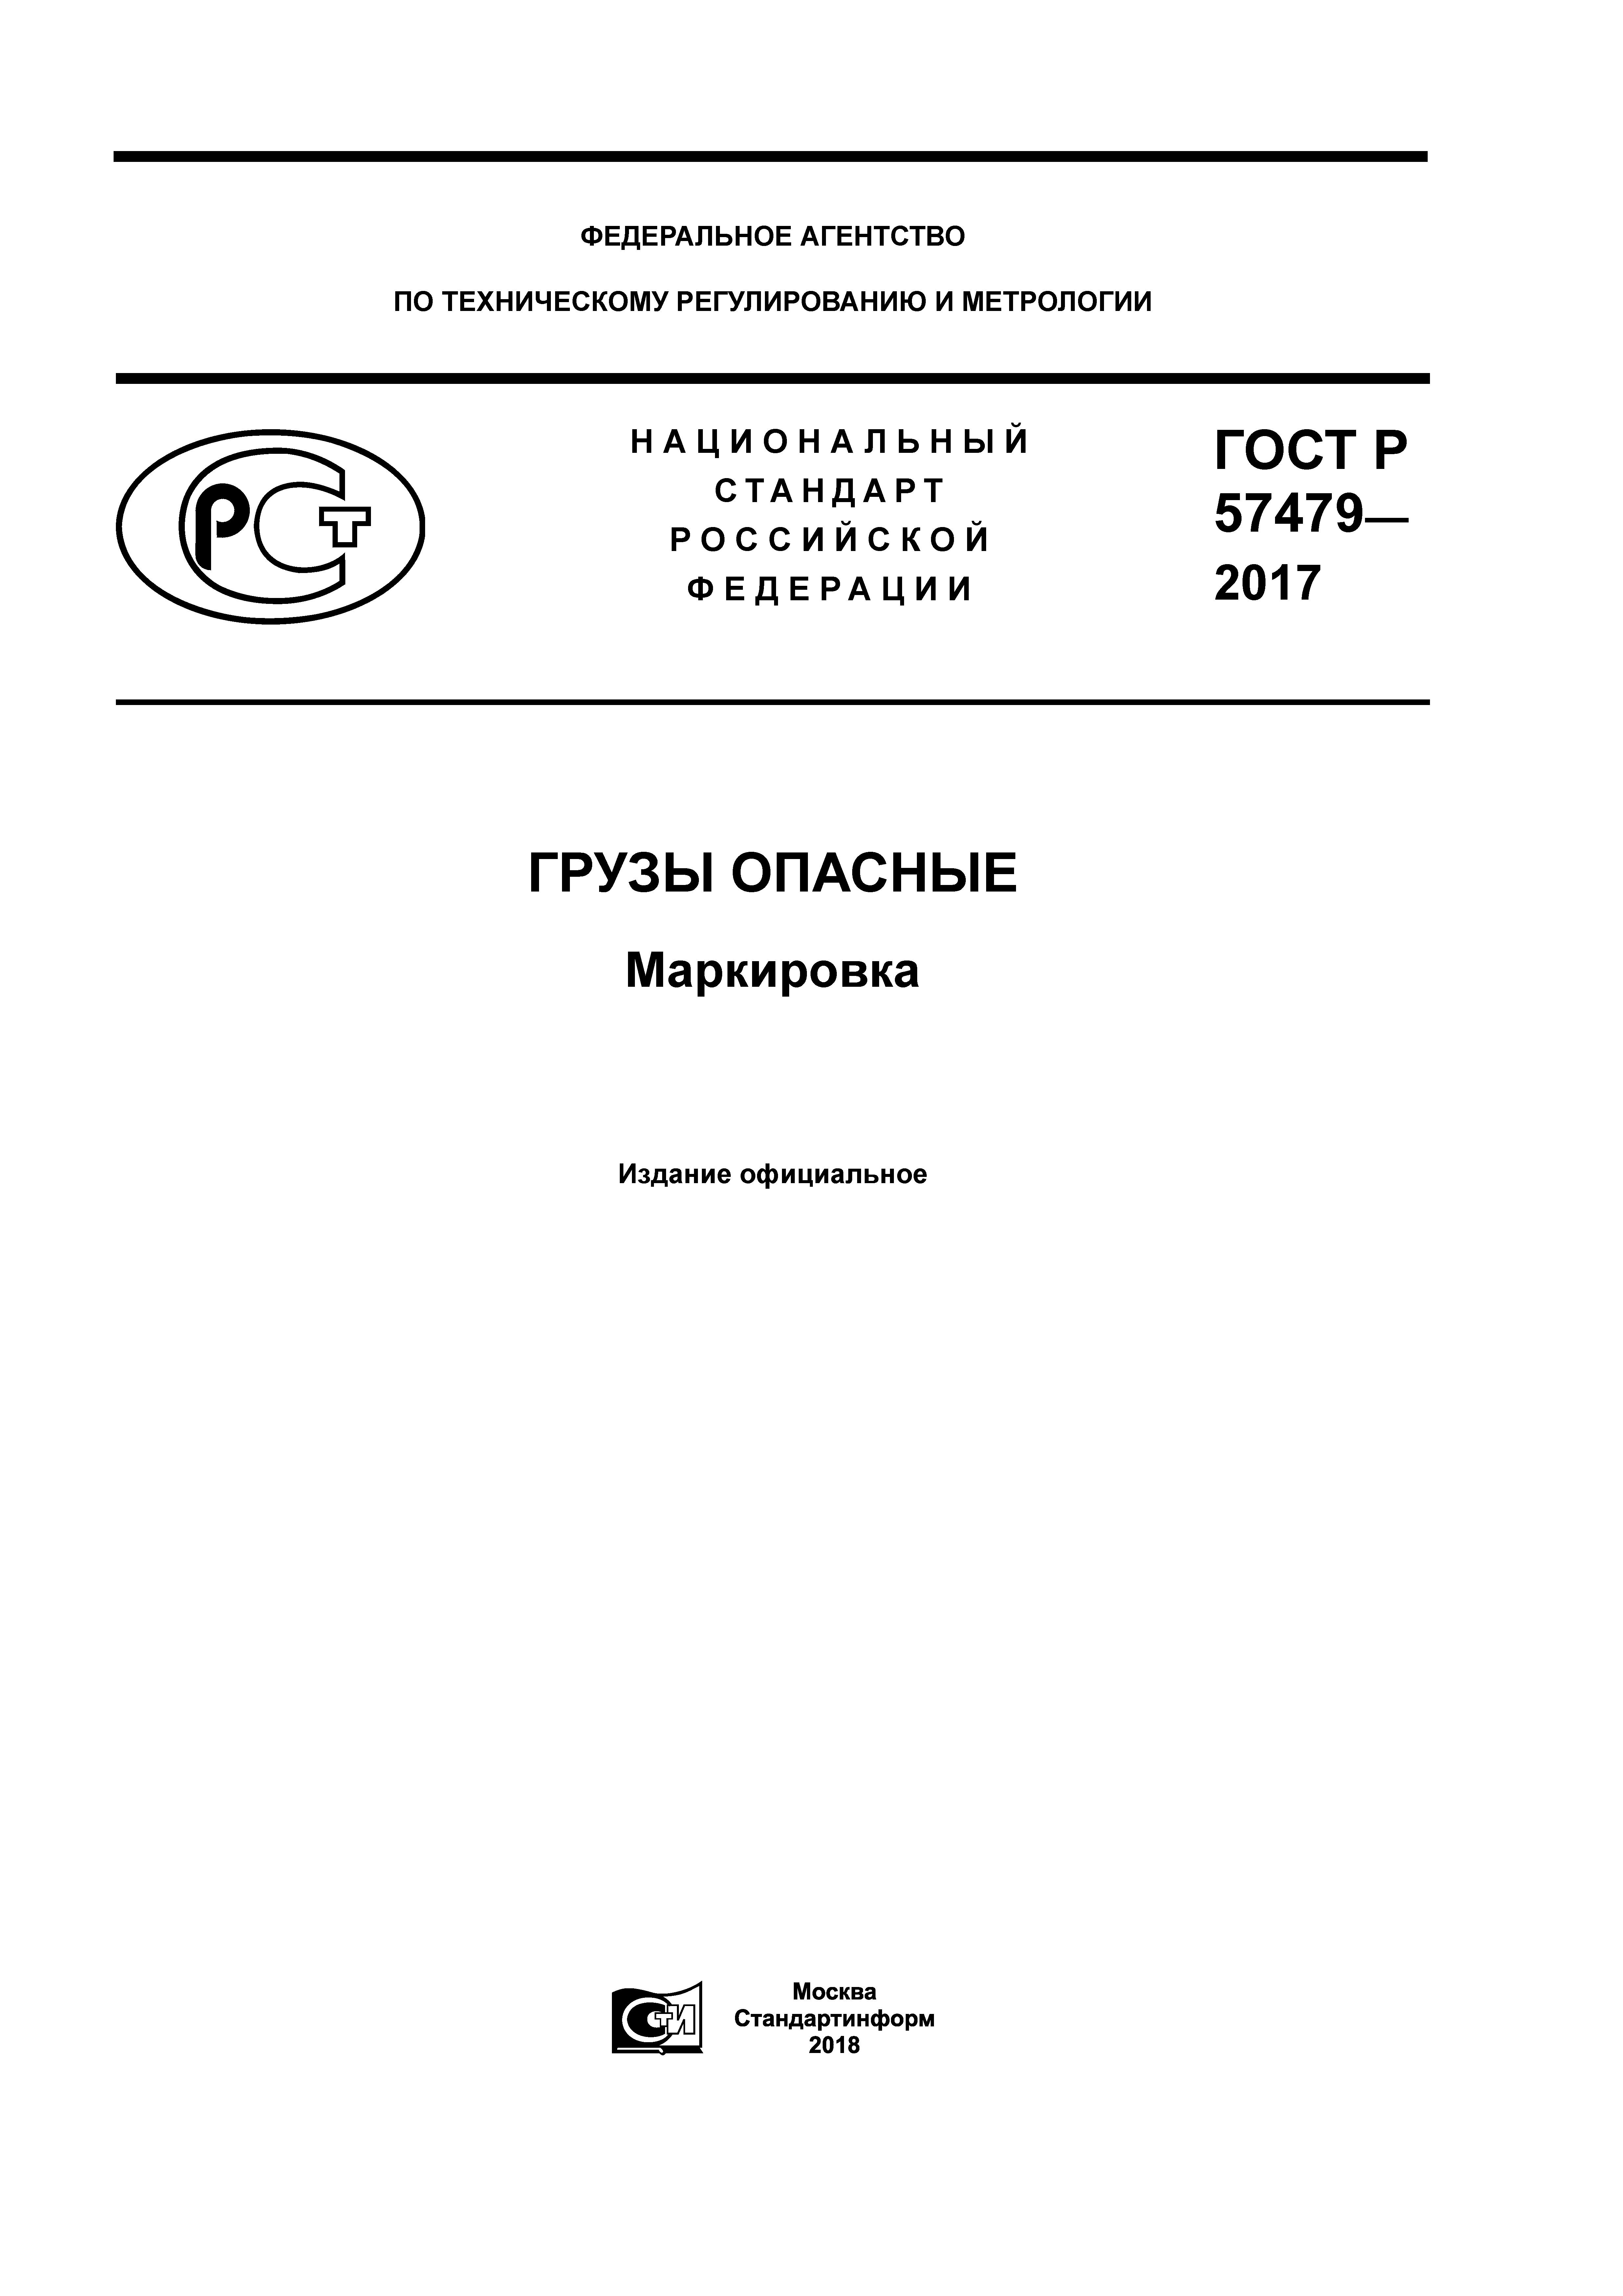 ГОСТ Р 57479-2017